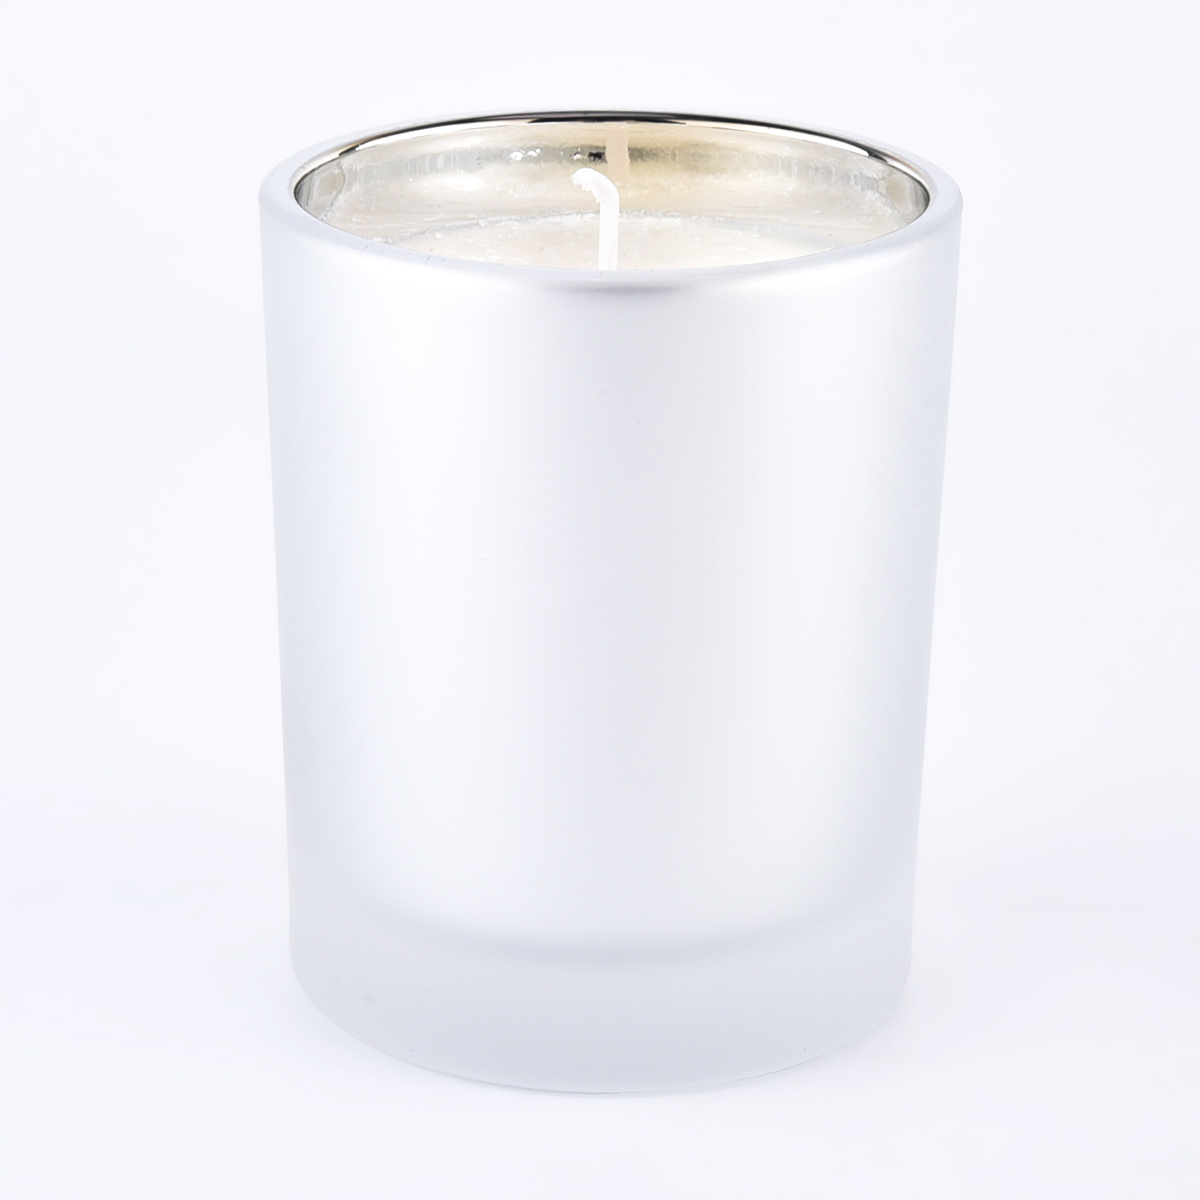 Vasos de vela de vidro coloridos personalizados com prata galvanizada dentro para atacado